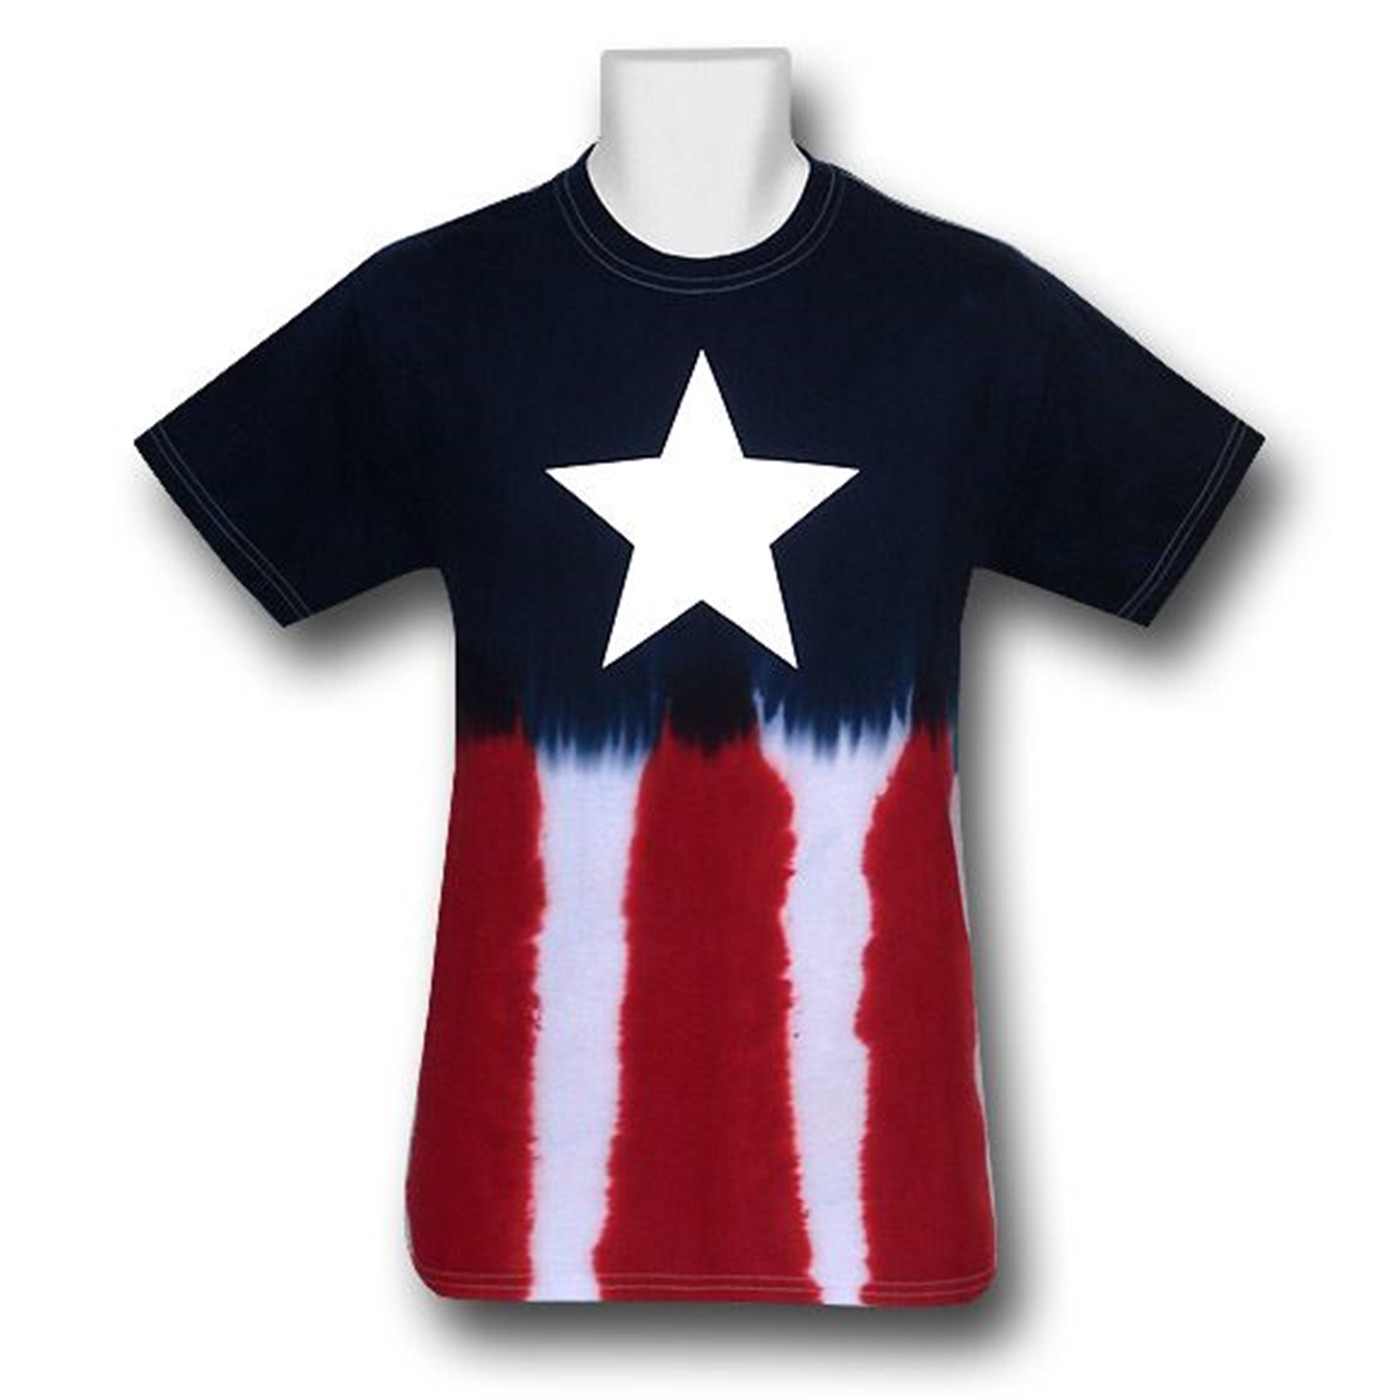 Captain America Tie Dye Costume T-Shirt